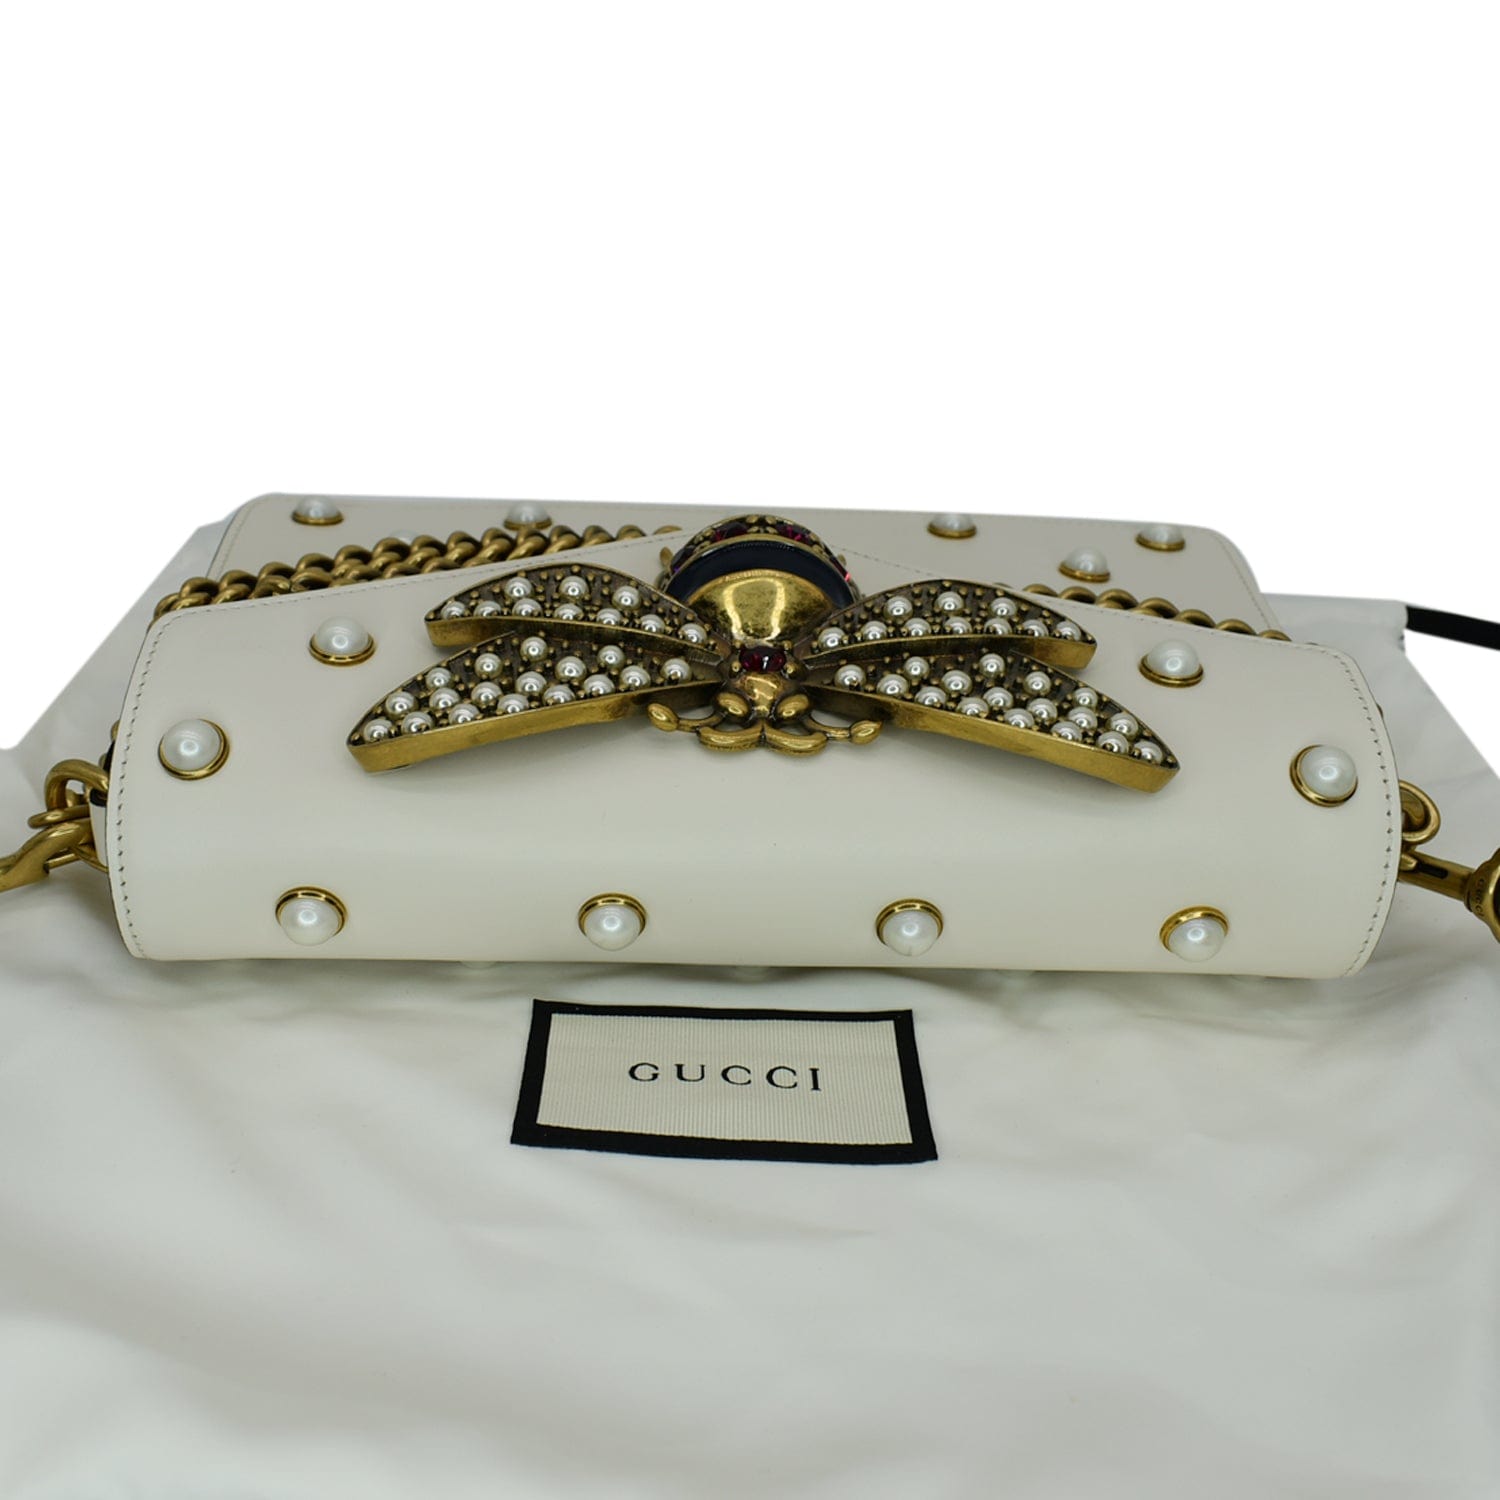 Gucci, Broadway Queen Margaret Pearls Bee Handbag White Leather Cross B